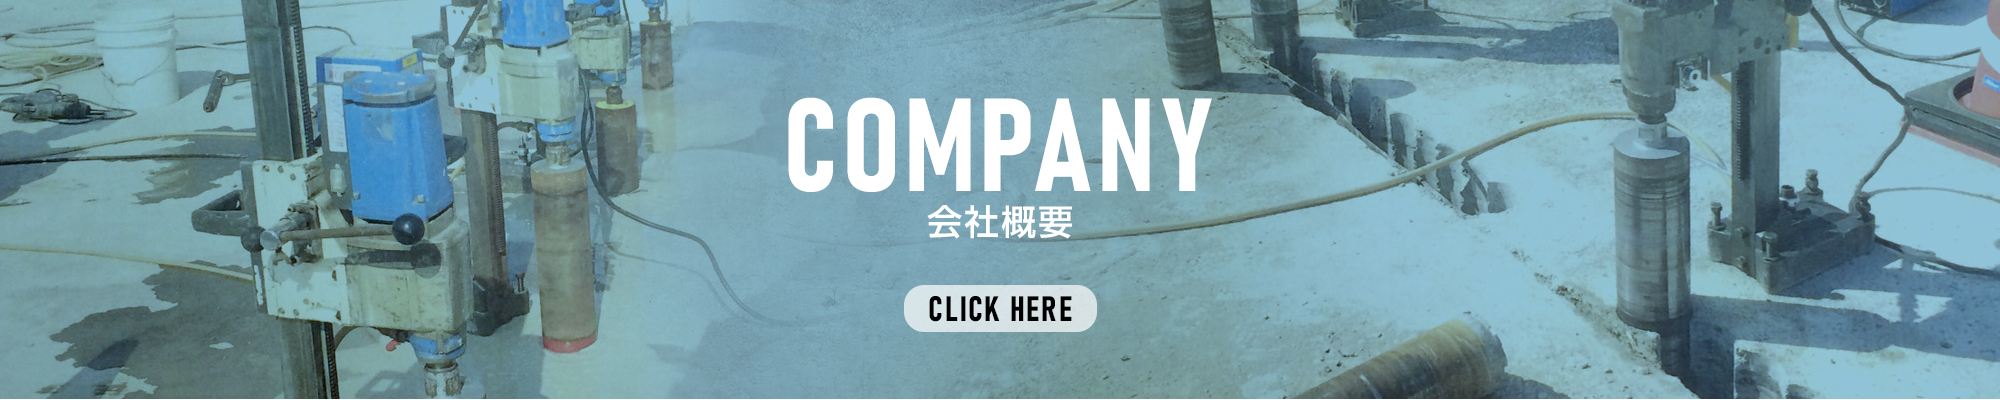 banner_company_bg